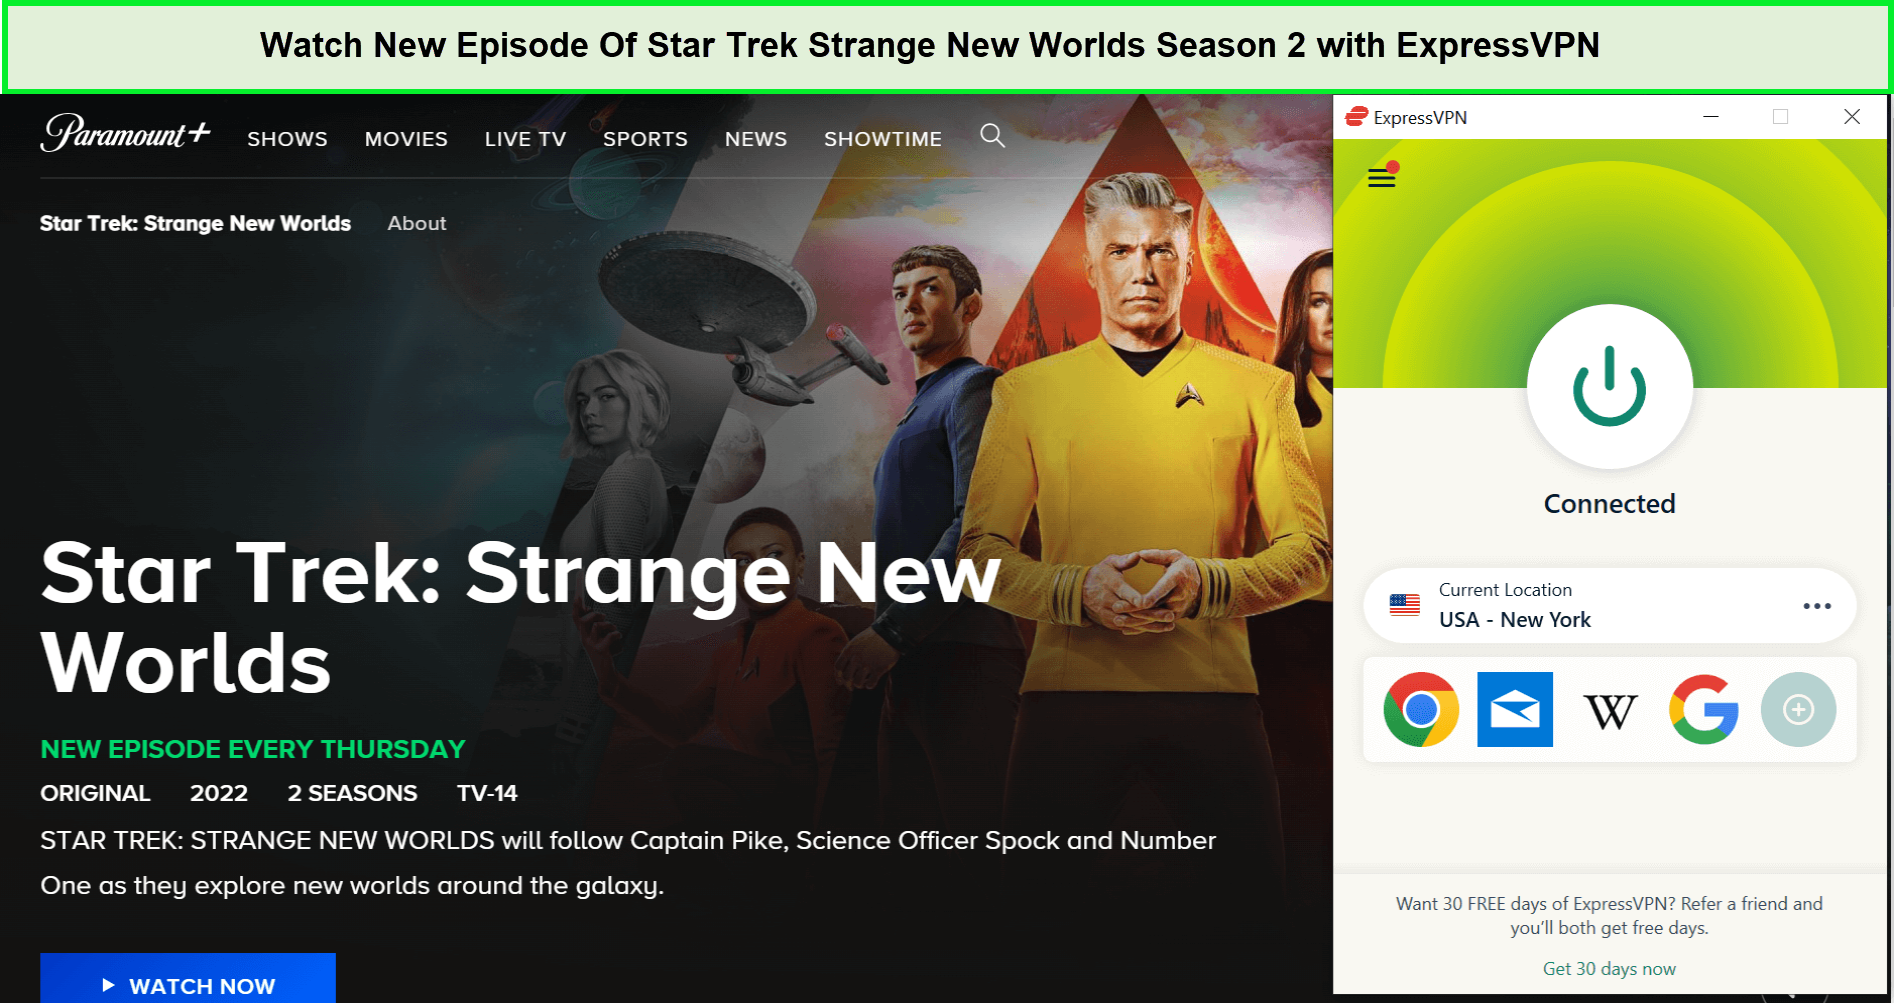 Watch-New-Episode-Of-Star-Trek-Strange-New-Worlds-Season-2-outside-USA-with-ExpressVPN